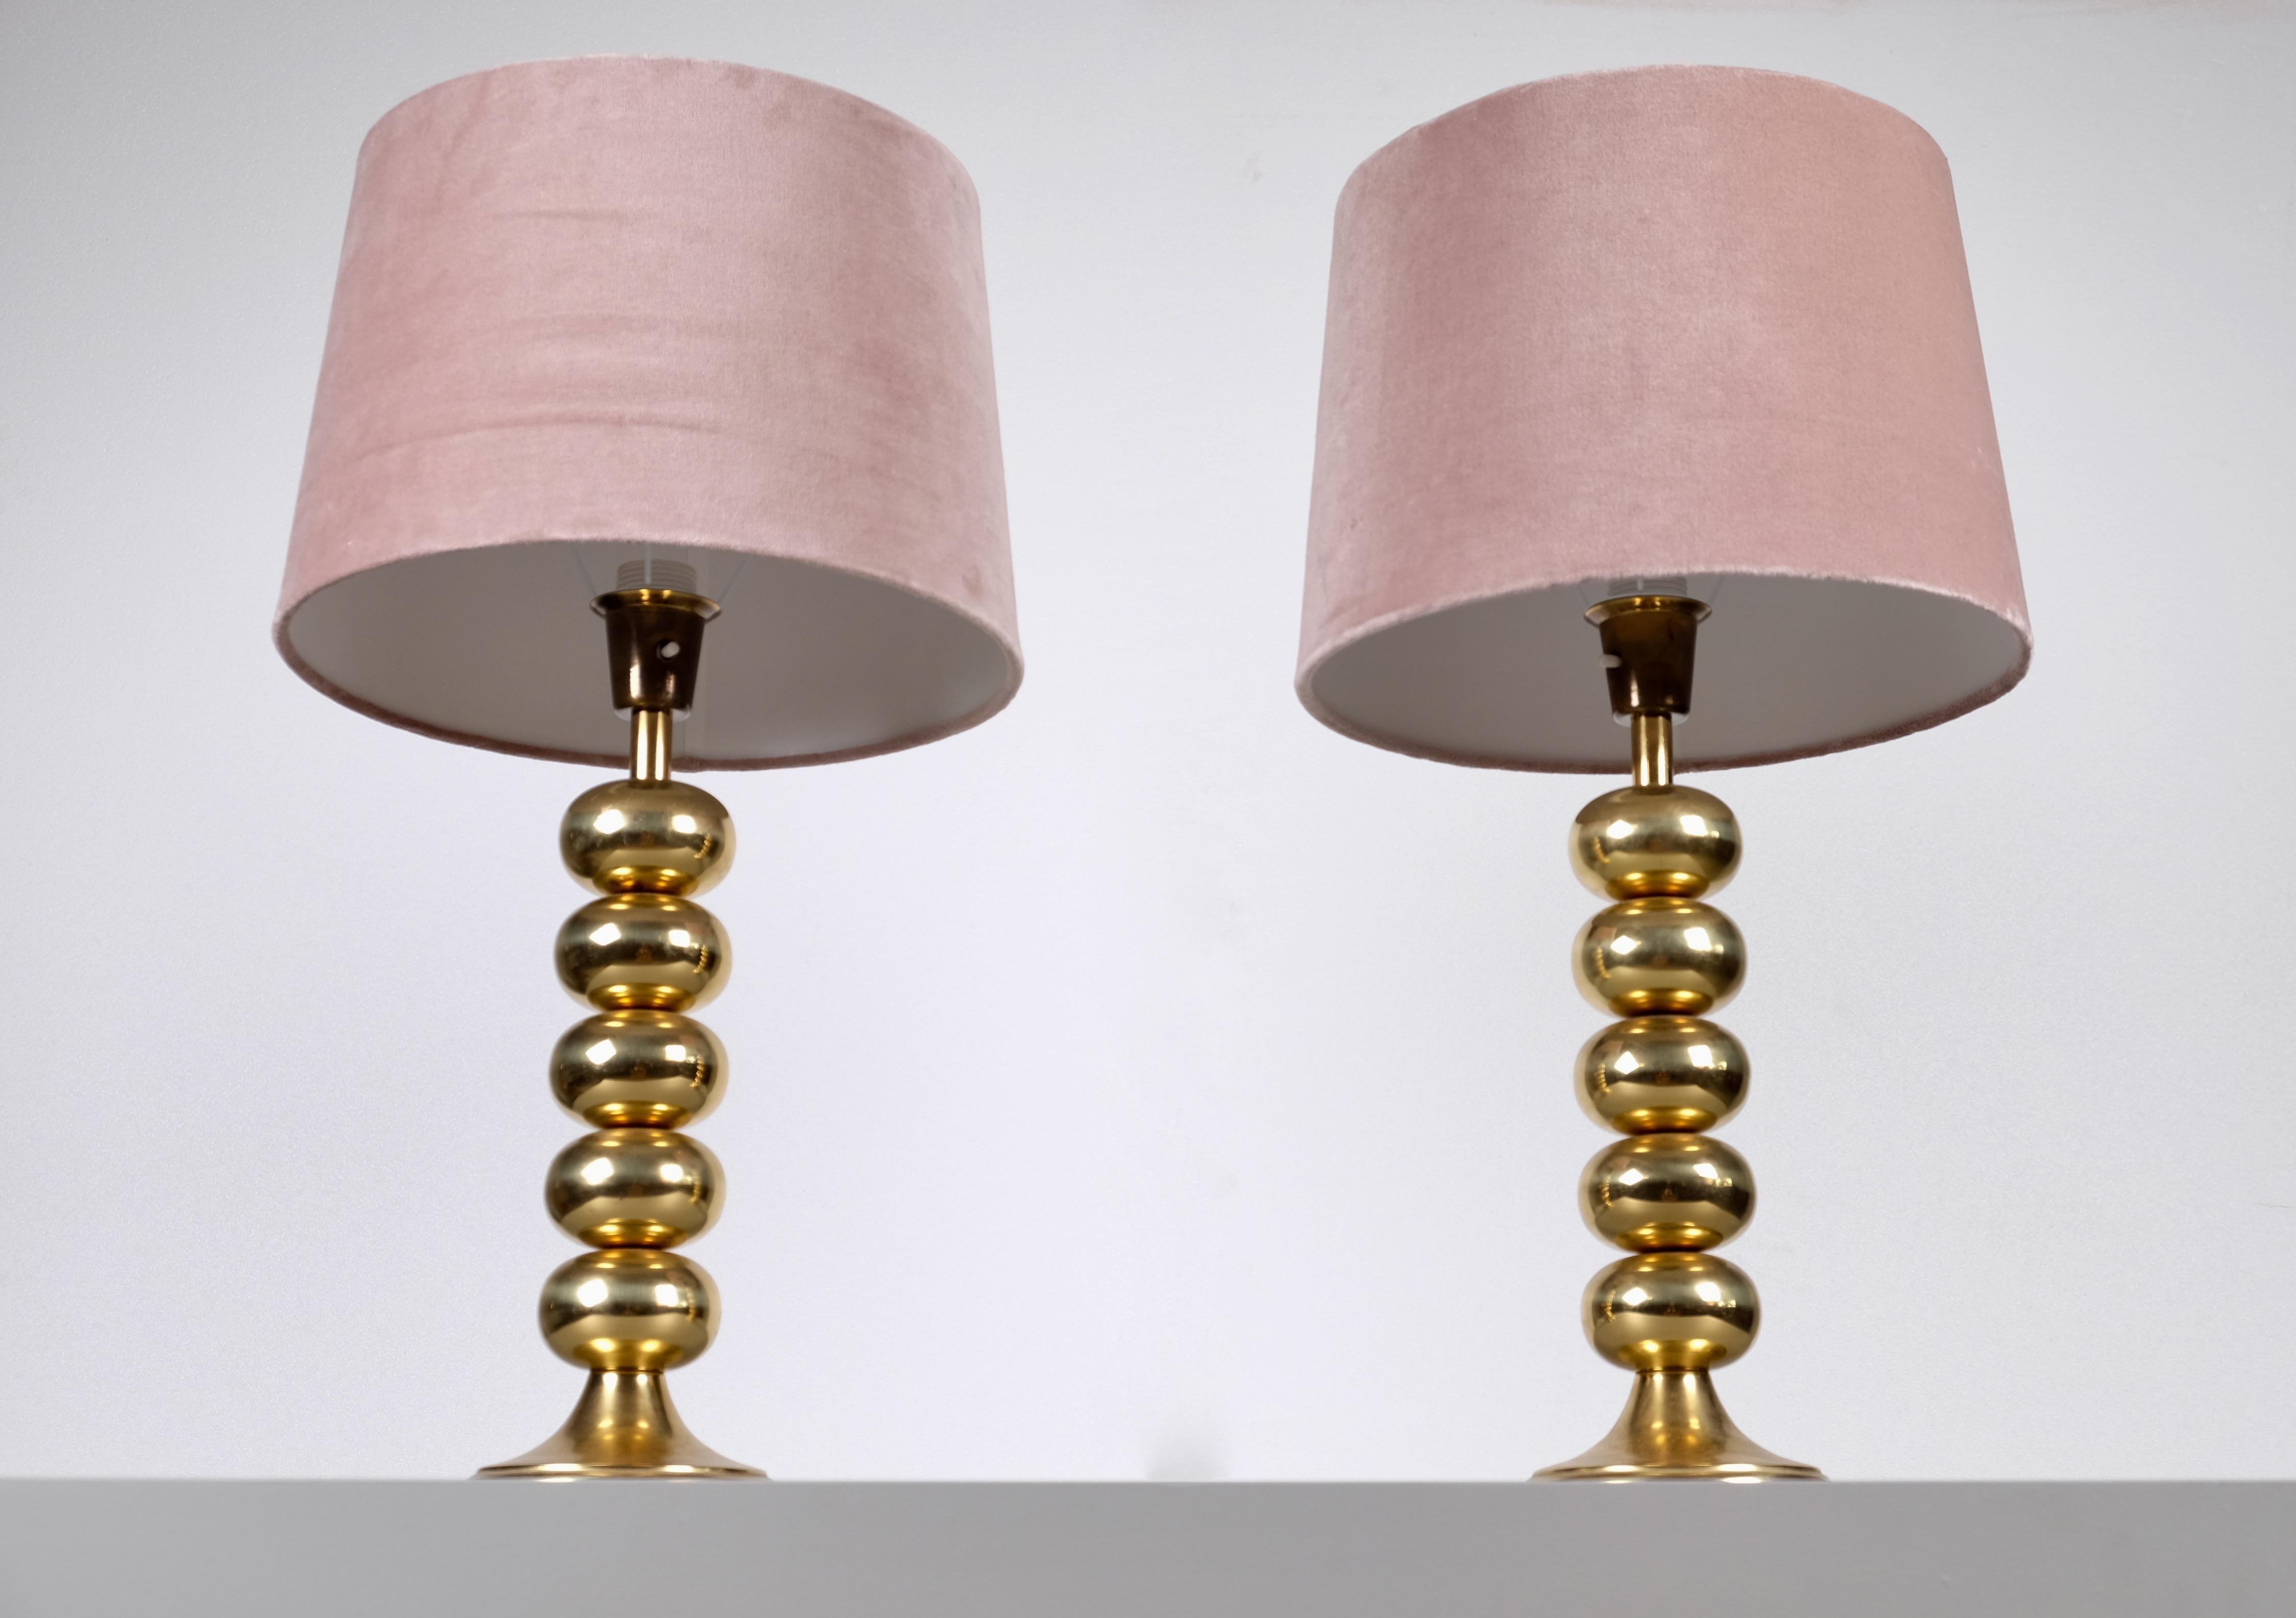 Scandinavian Modern Pair of Brass Table Lamps by Aneta, Sweden, 1970s